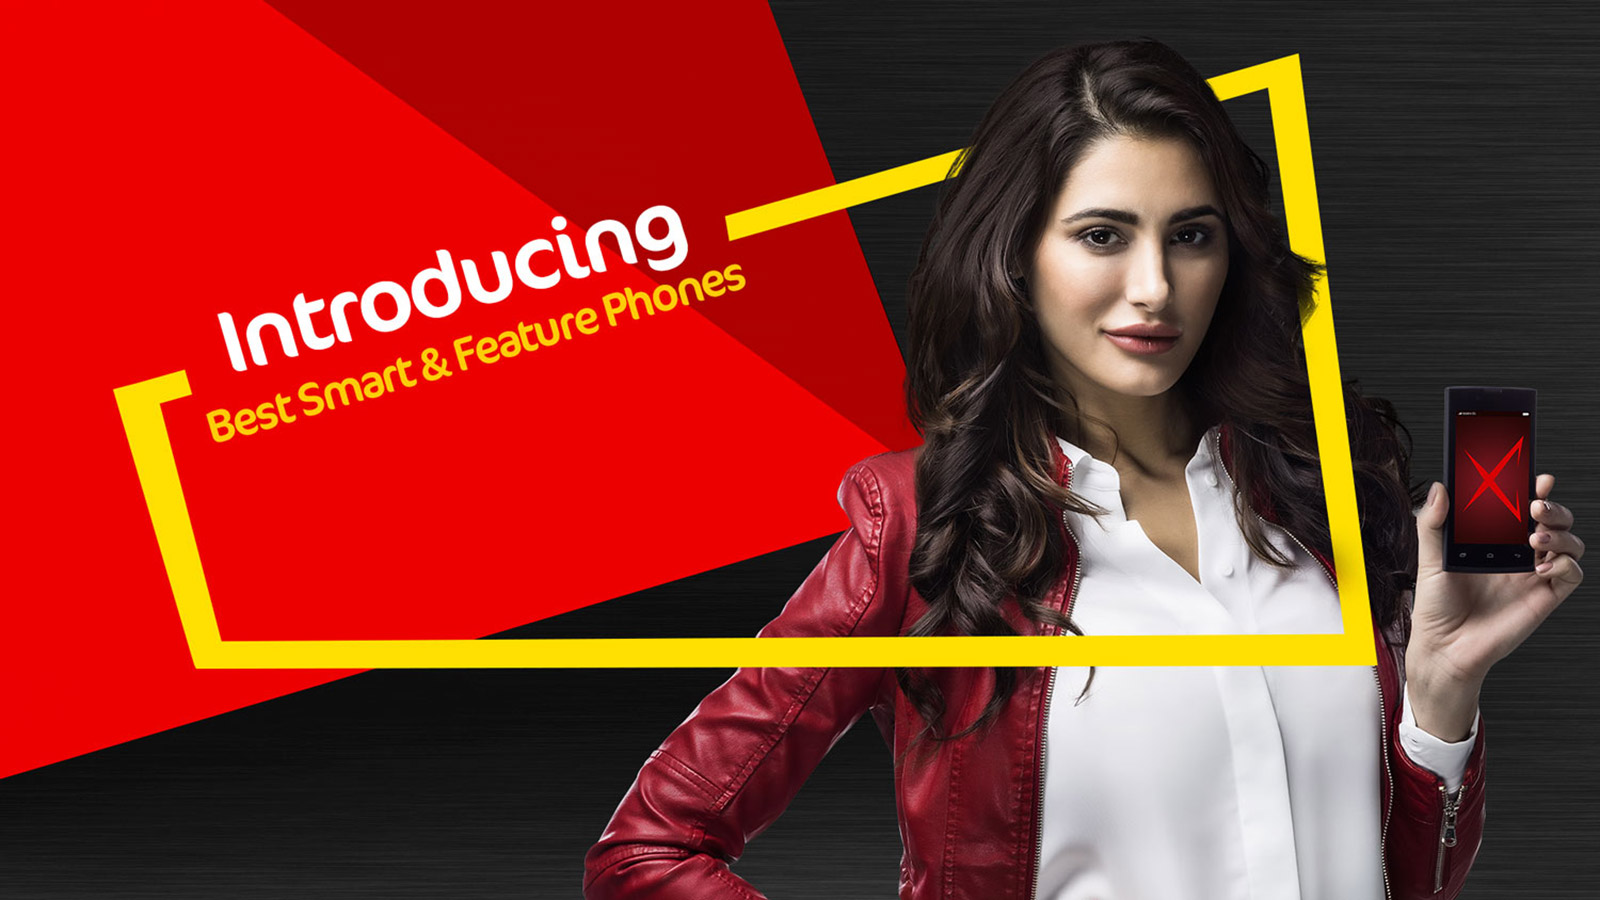 mobilink Jazz X Nargis telecom pakistan website billboards